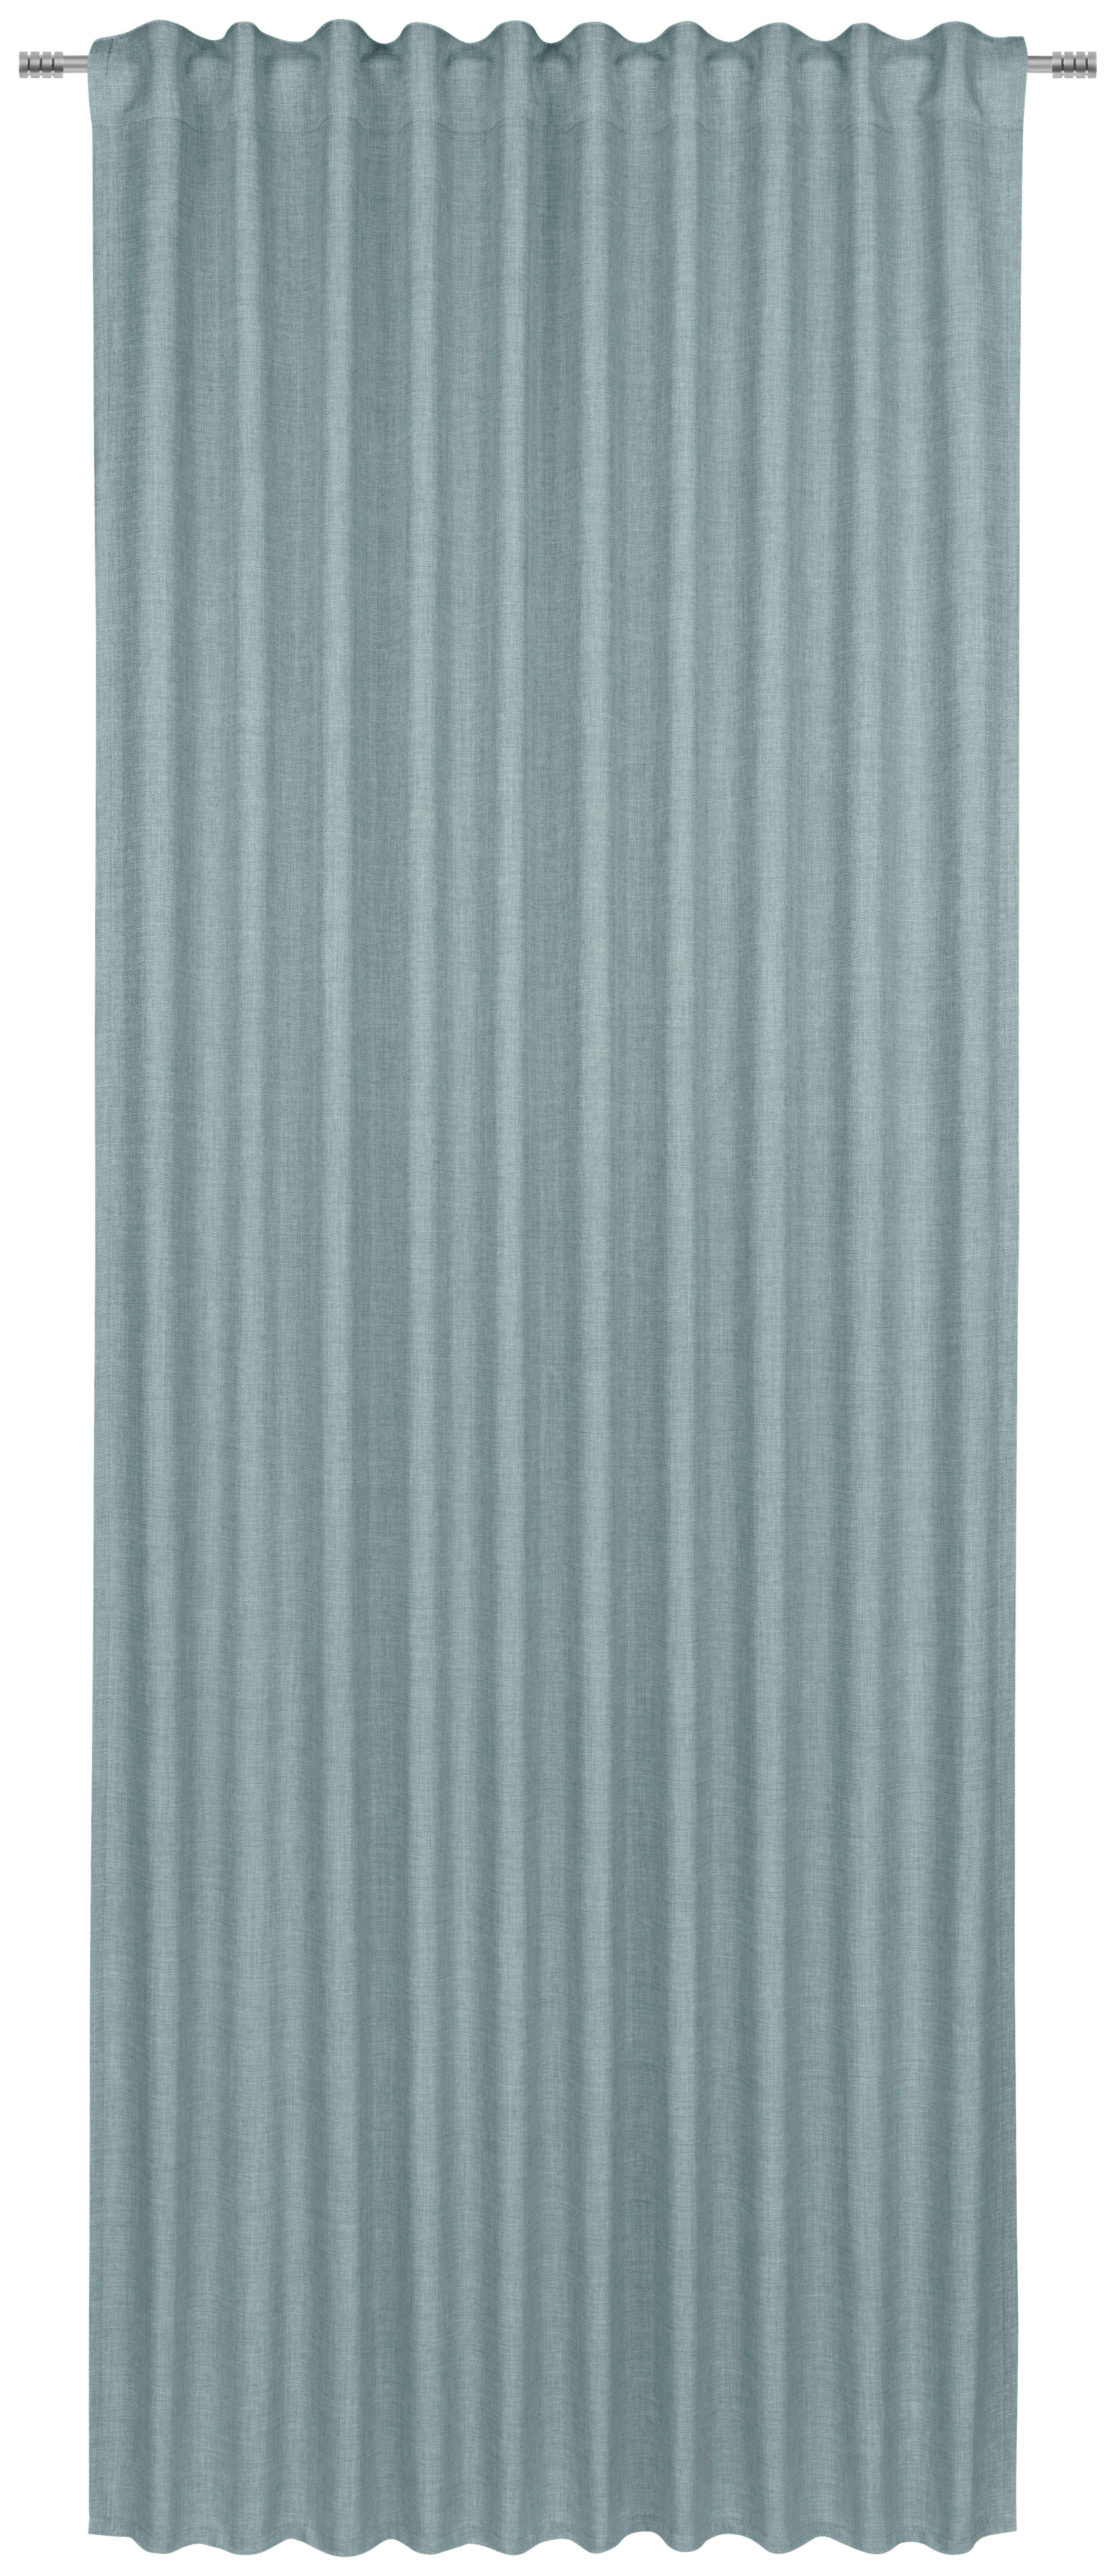 FERTIGVORHANG FREDDY blickdicht 140/245 cm   - Hellgrau/Hellblau, Basics, Textil (140/245cm) - Boxxx